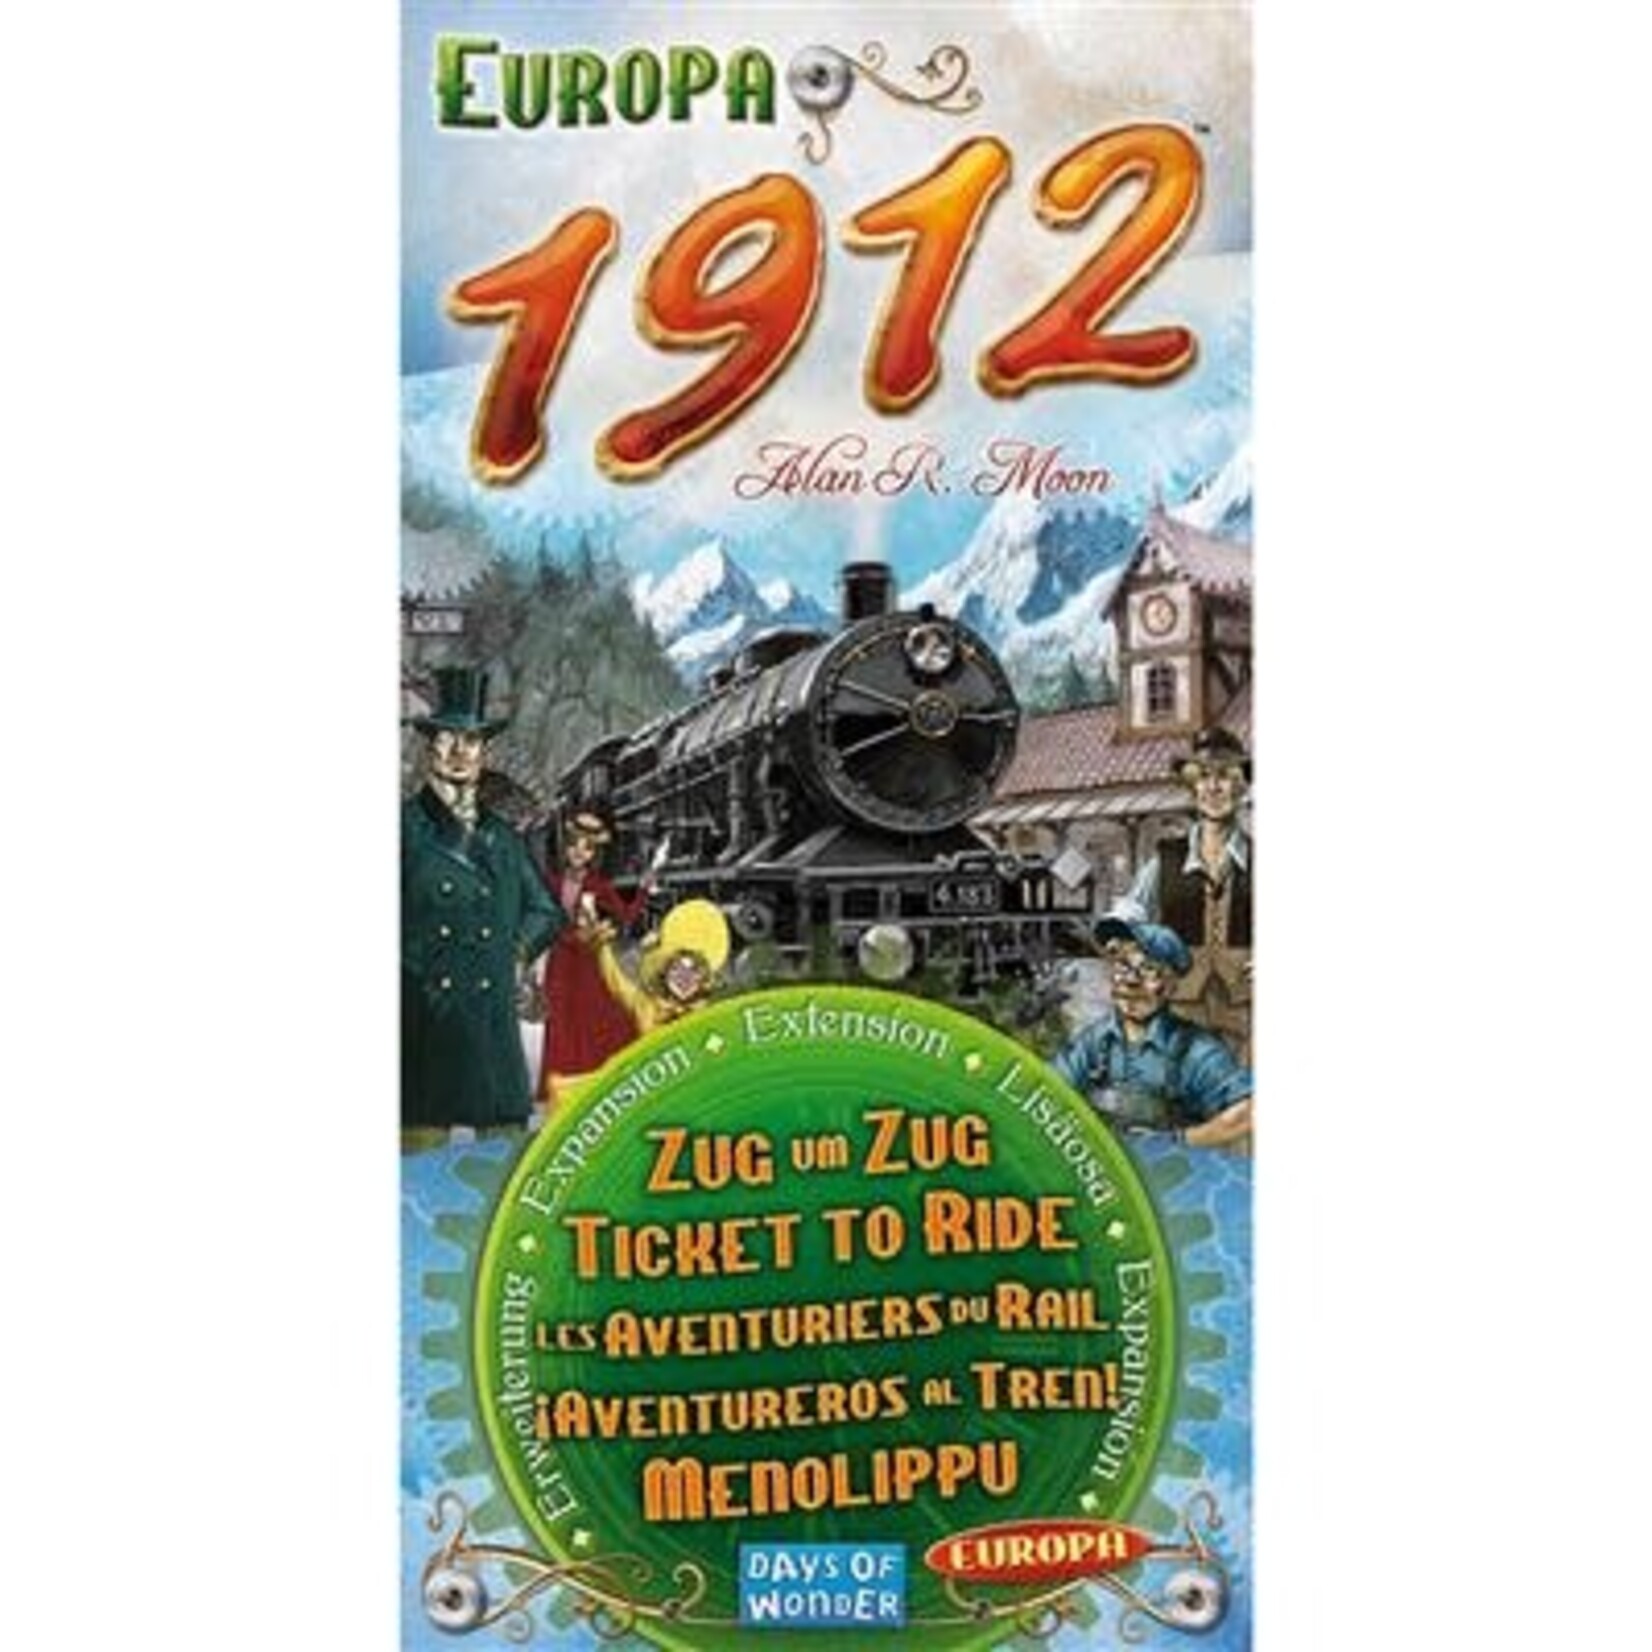 Days of Wonder Ticket to Ride: Europa - 1912 Expansion